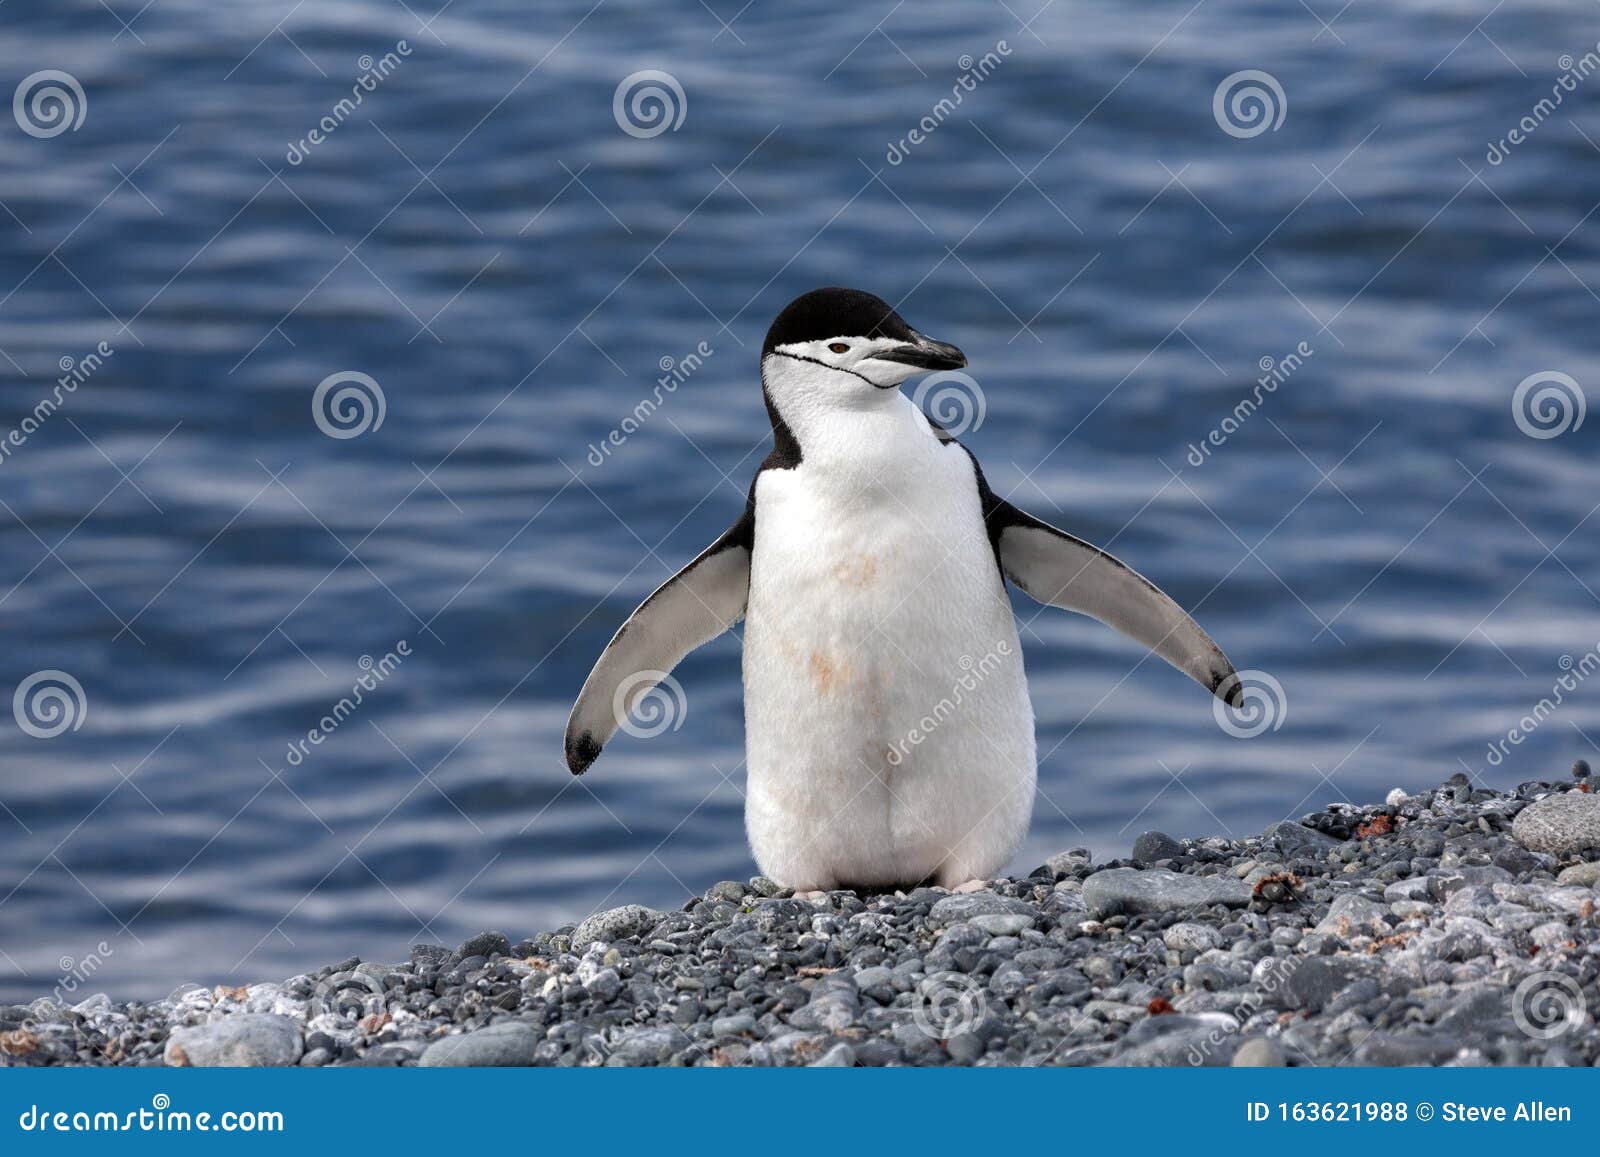 chinstrap penguin - south shetland islands - antarctica